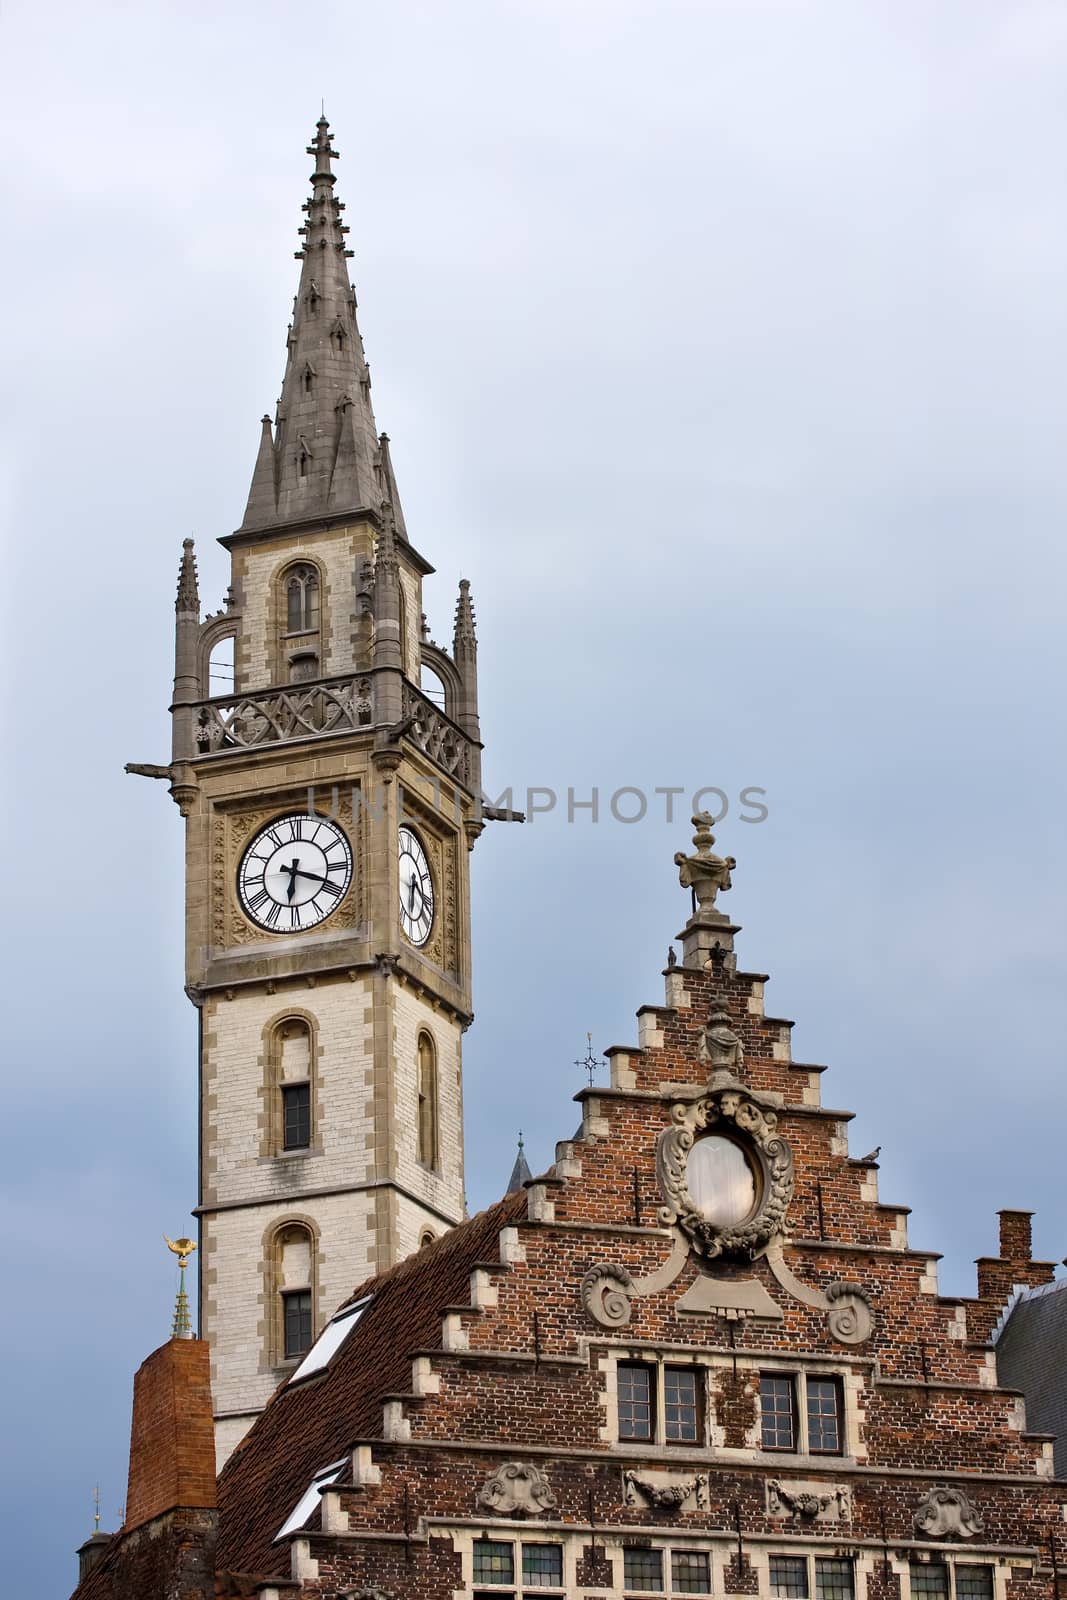 Clock tower in Gent, Belgium